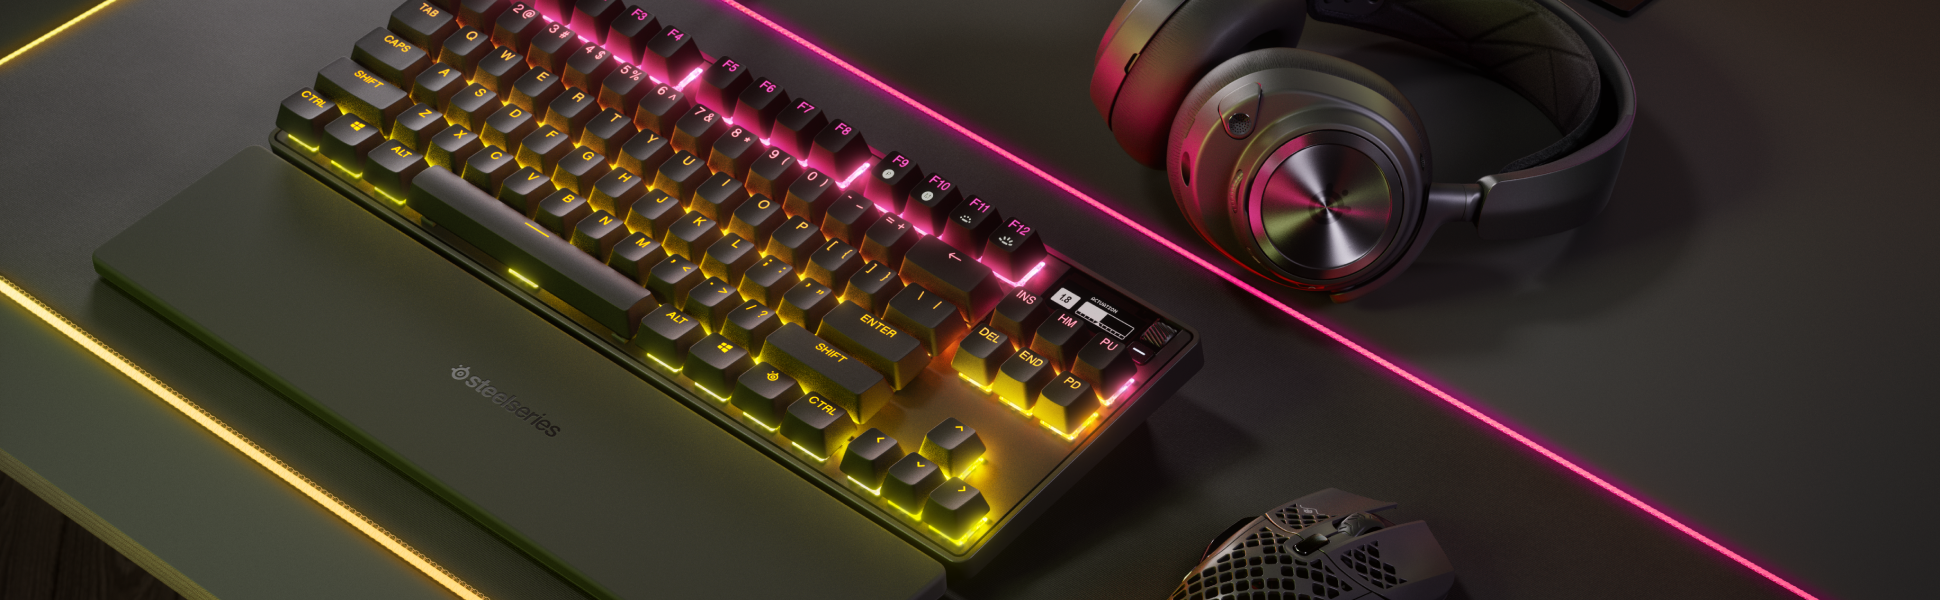 SteelSeries Apex Pro TKL HyperMagnetic Gaming Keyboard - World's Fastest  Keyboard - Adjustable Actuation - Esports Tenkeyless - OLED Screen - RGB -  PBT Keycaps - USB-C - 2023 Edition,Black 